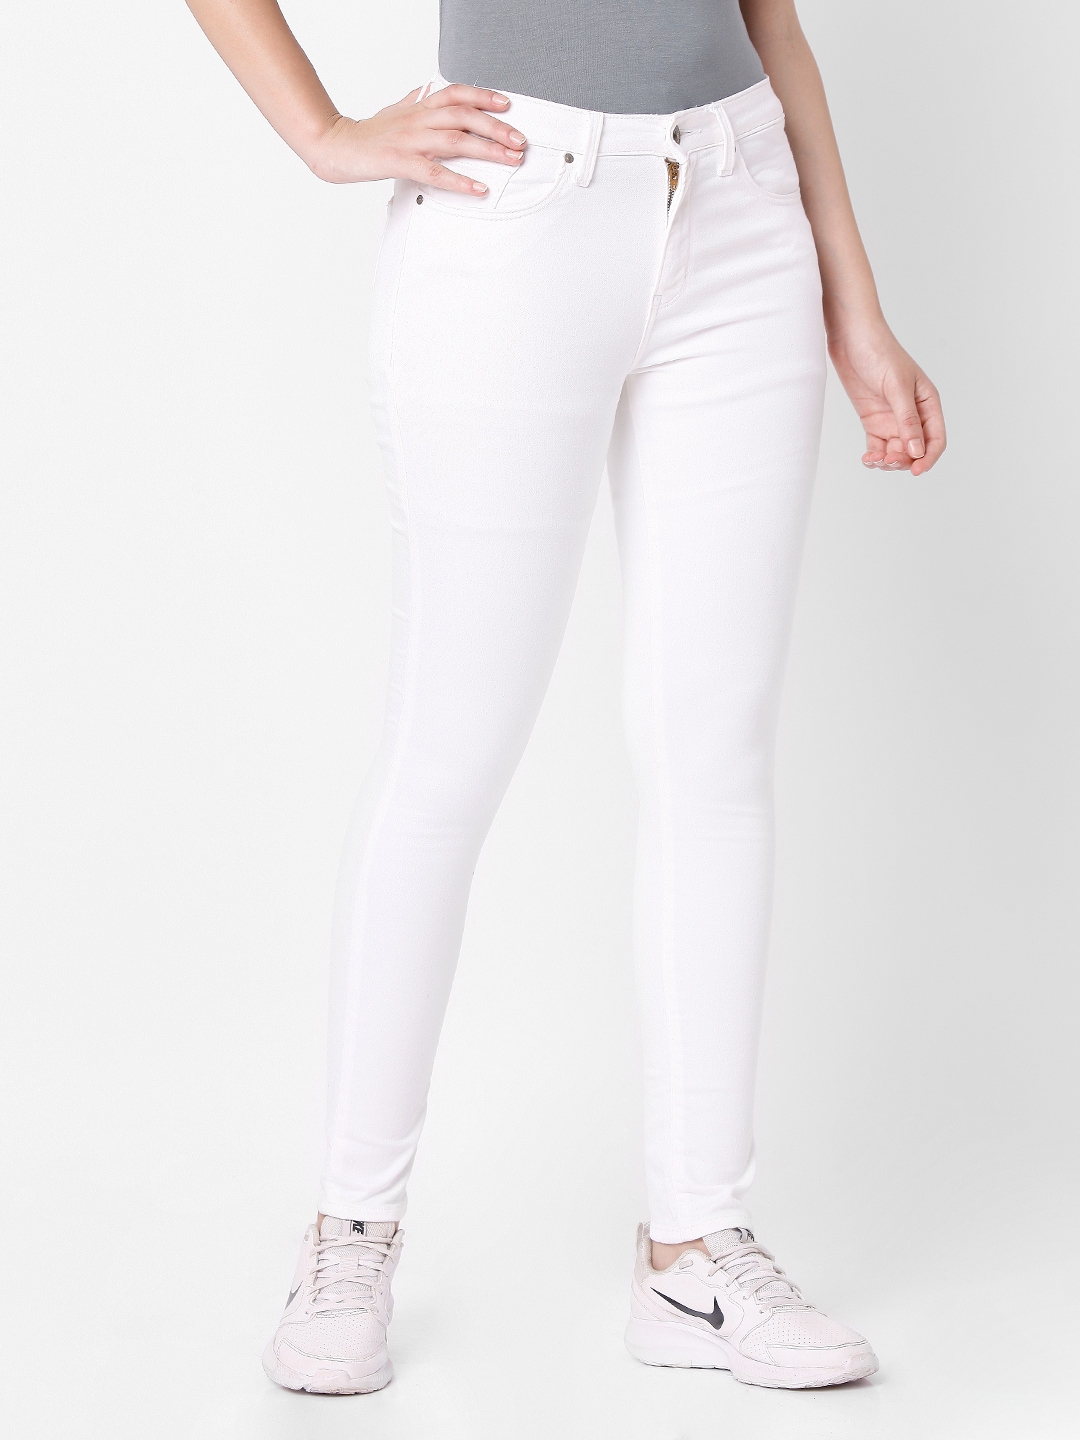 spykar | Women's White Cotton Solid Skinny Jeans 2